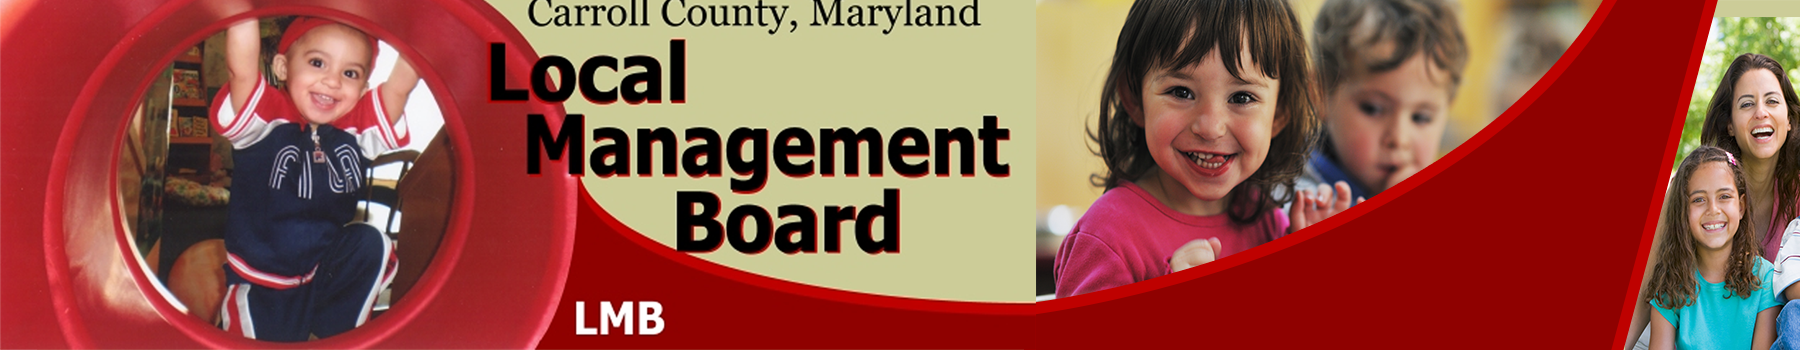 Carroll County Local Management Board Membership